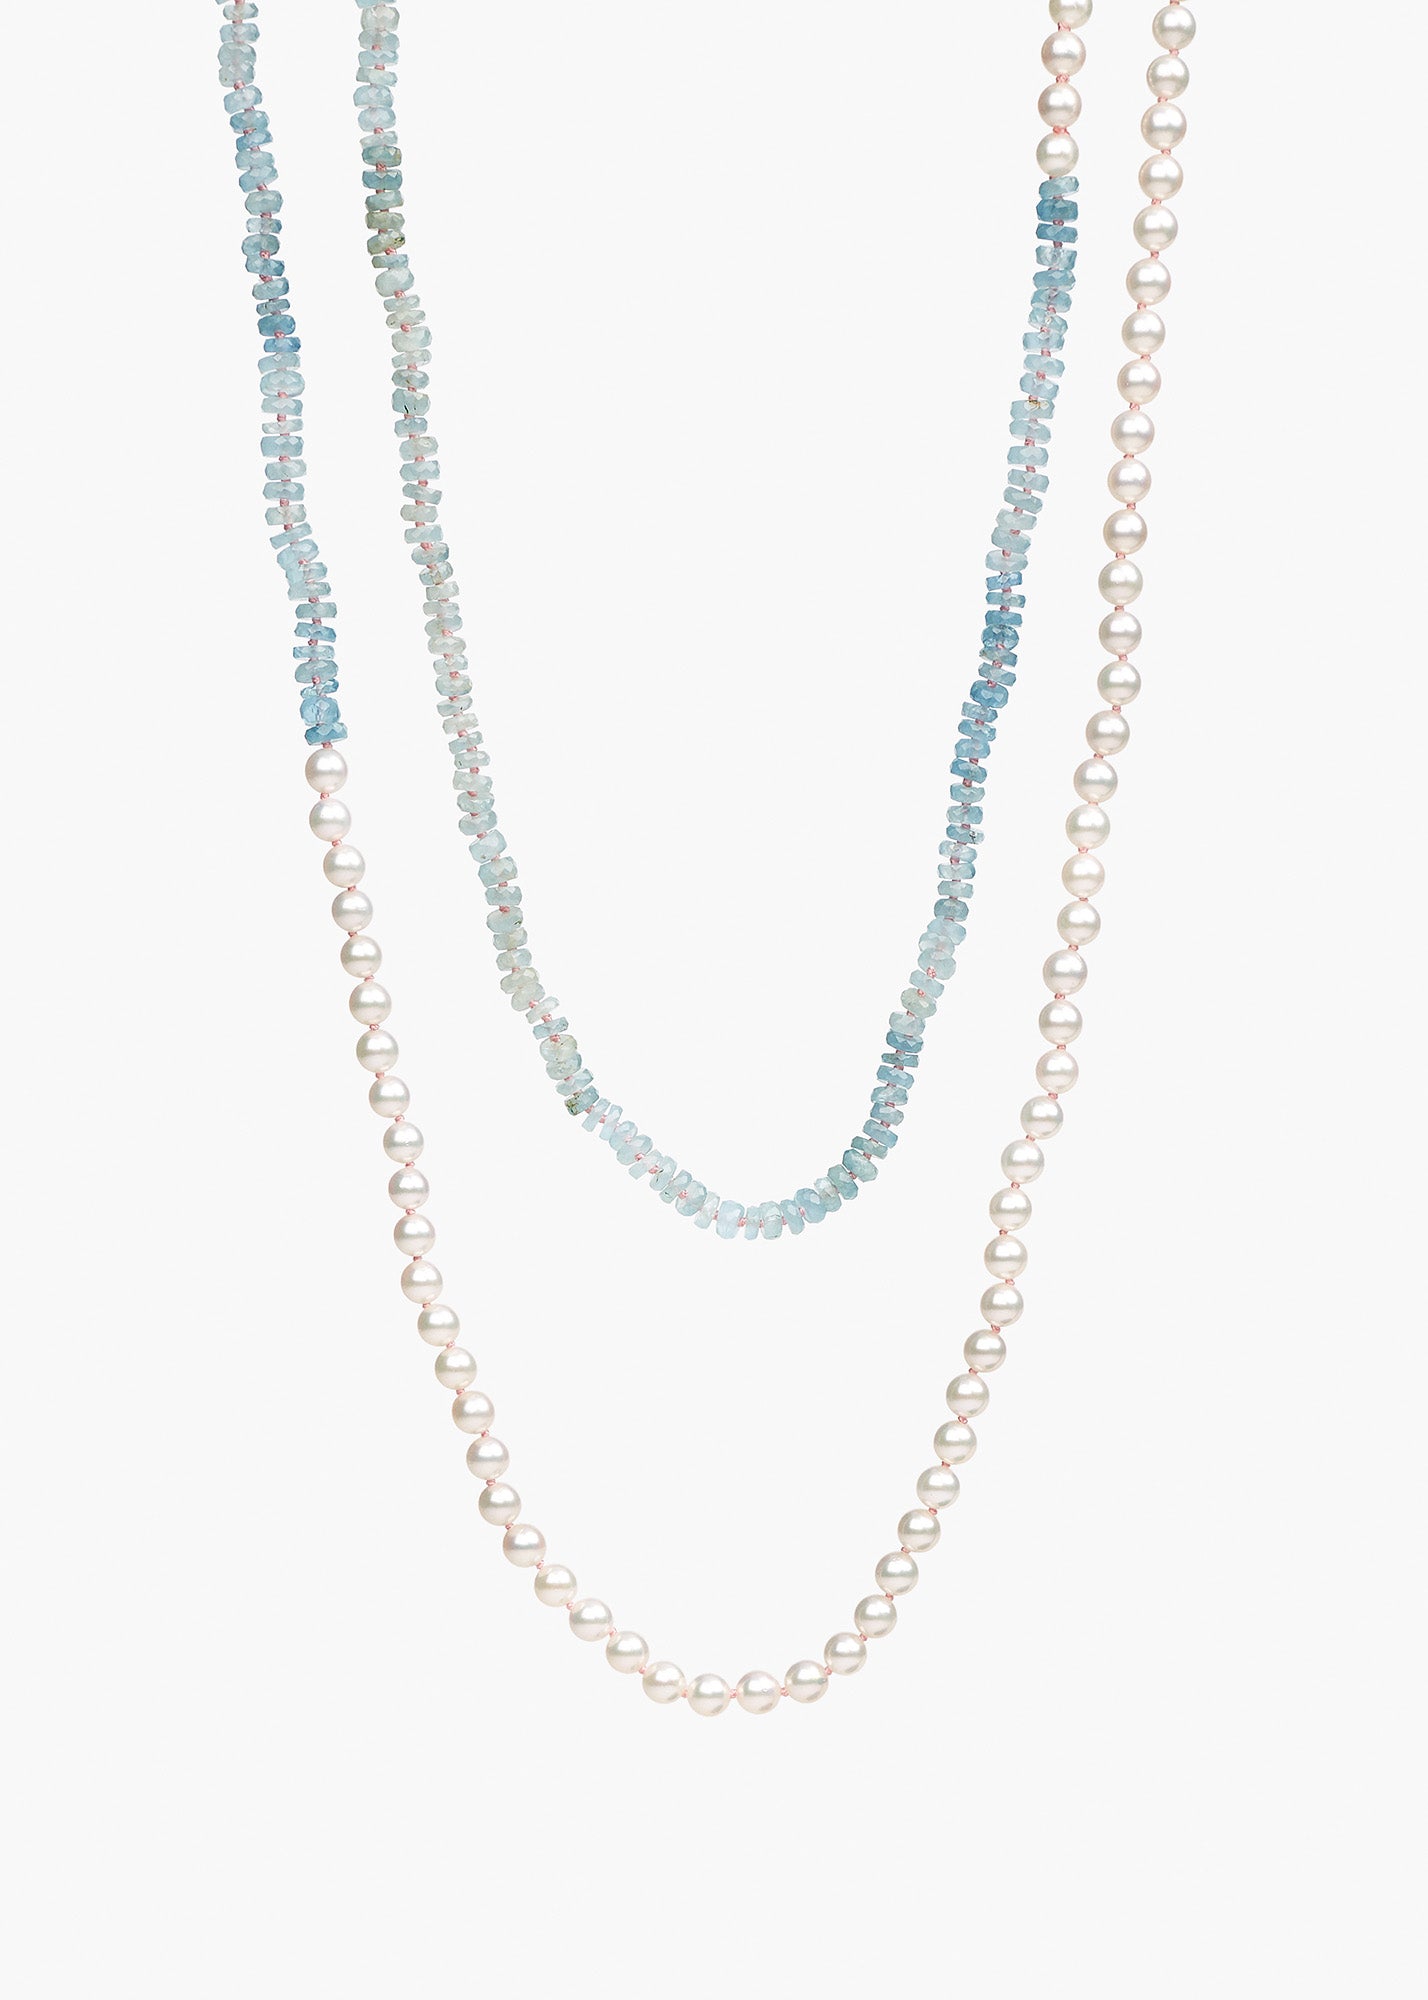 Will Hanigan Pearls Akoya Pearl and Aquamarine Necklace | Tiina The Store